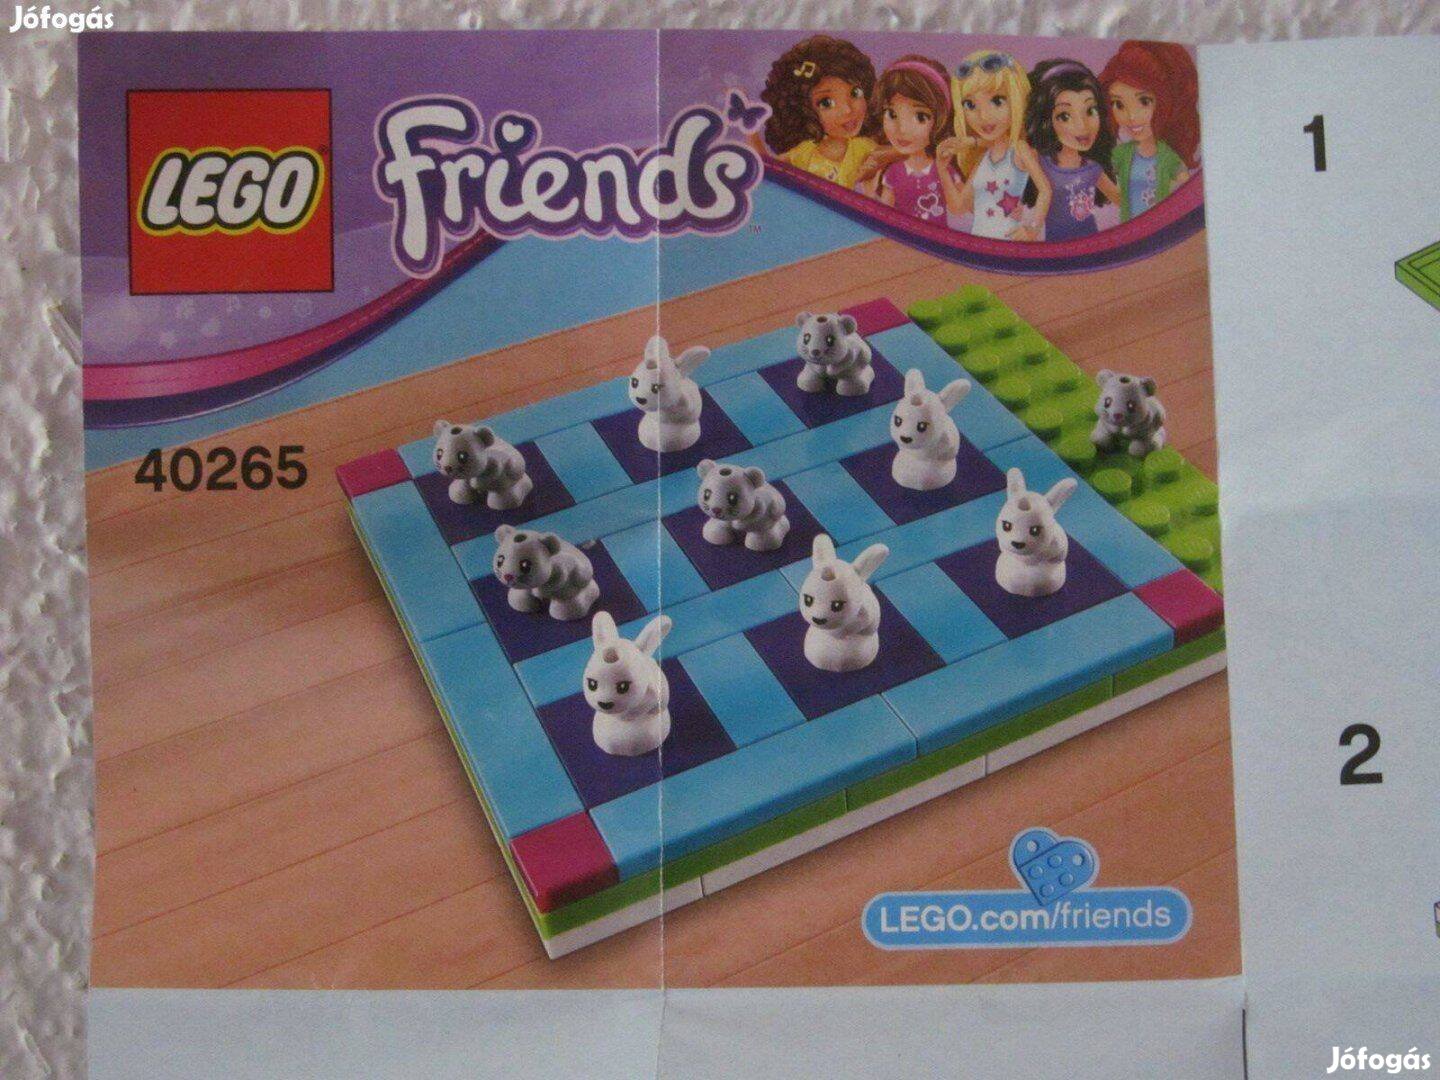 LEGO Friends - Tic-Tac-Toe 40265